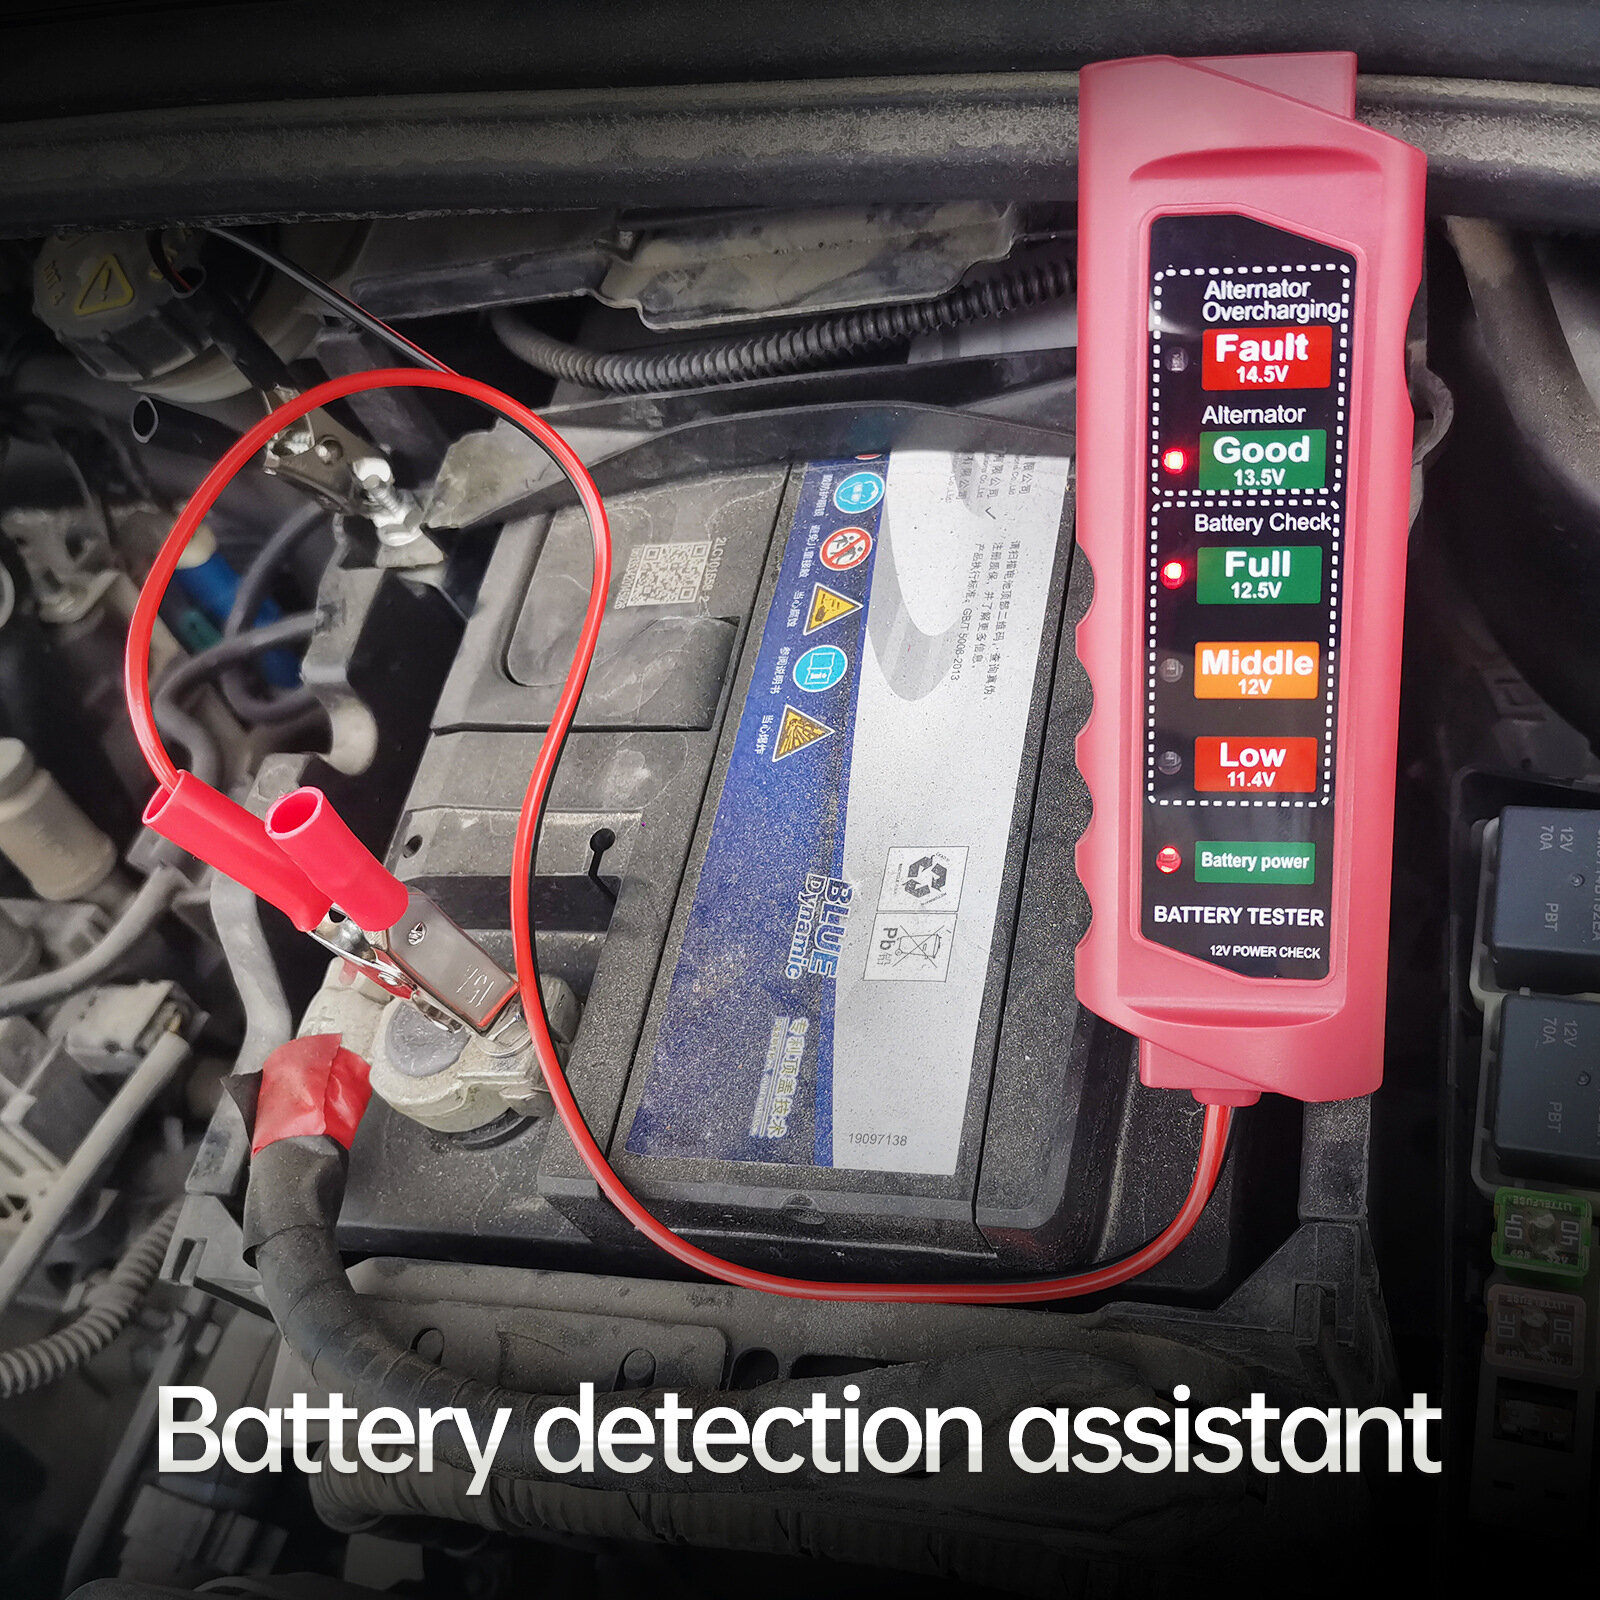 BT890 Advanced Car Battery Tester with Convenient Alternator Check Broad Voltage Range DC4-16V Precise Measurements Out of Range Warning for Comprehensive Battery Maintenance